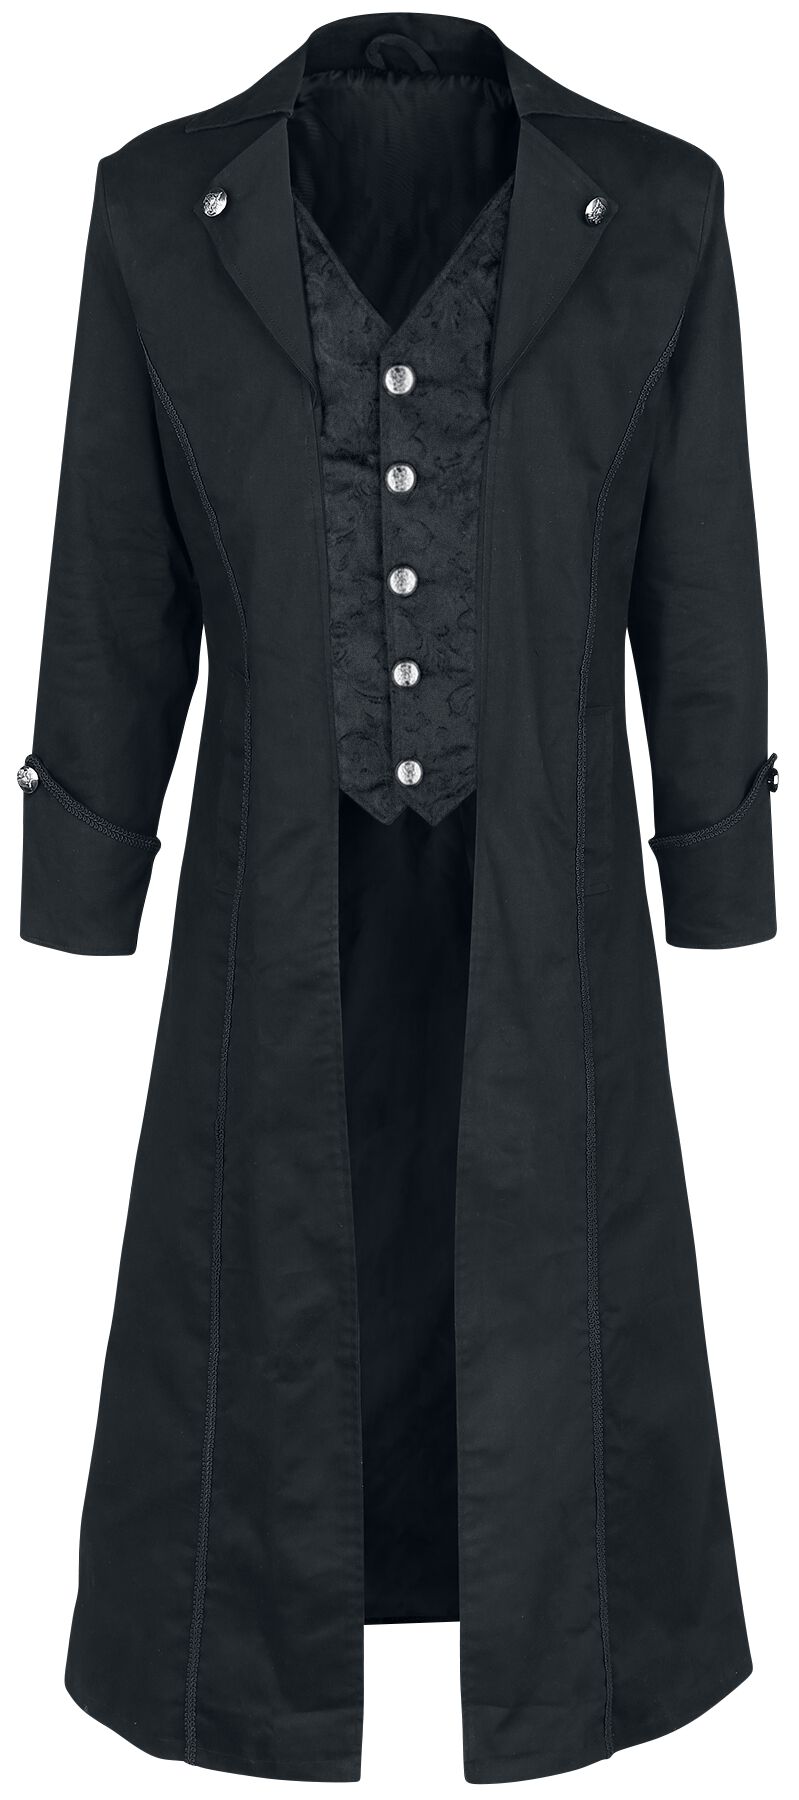 altana industries - gothic militÃ¤rmantel - dark brocade coat - m bis xxl - fÃ¼r mÃ¤nner - grÃ¶ÃŸe l - schwarz uomo